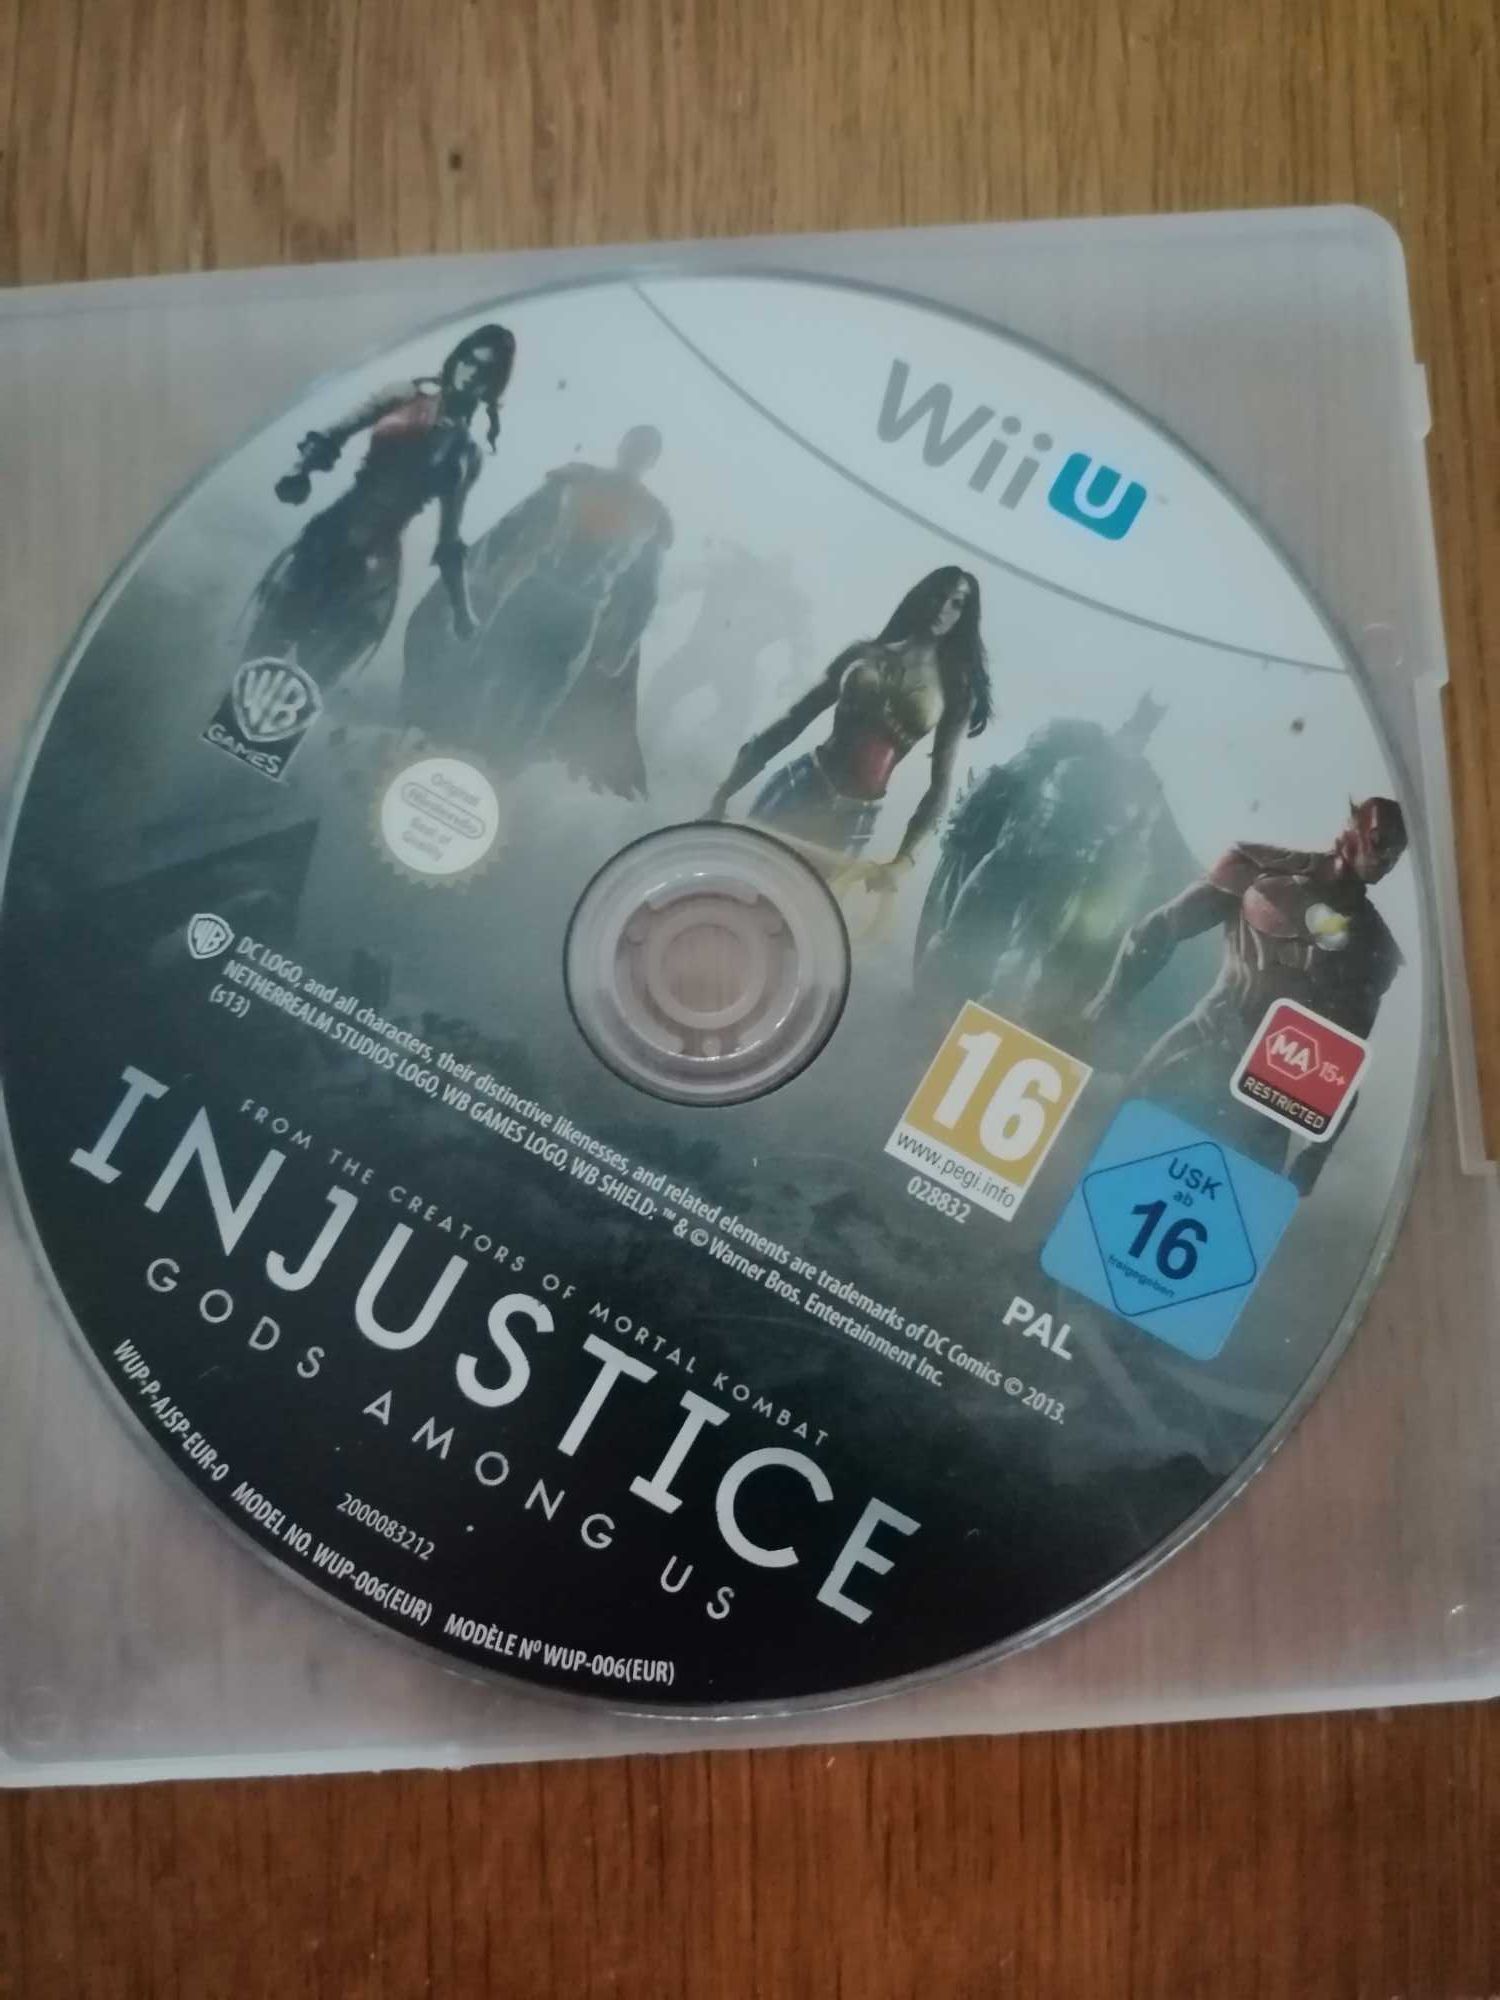 INJUSTICE (fara carcasa) - Nintendo WiiU / Wii U